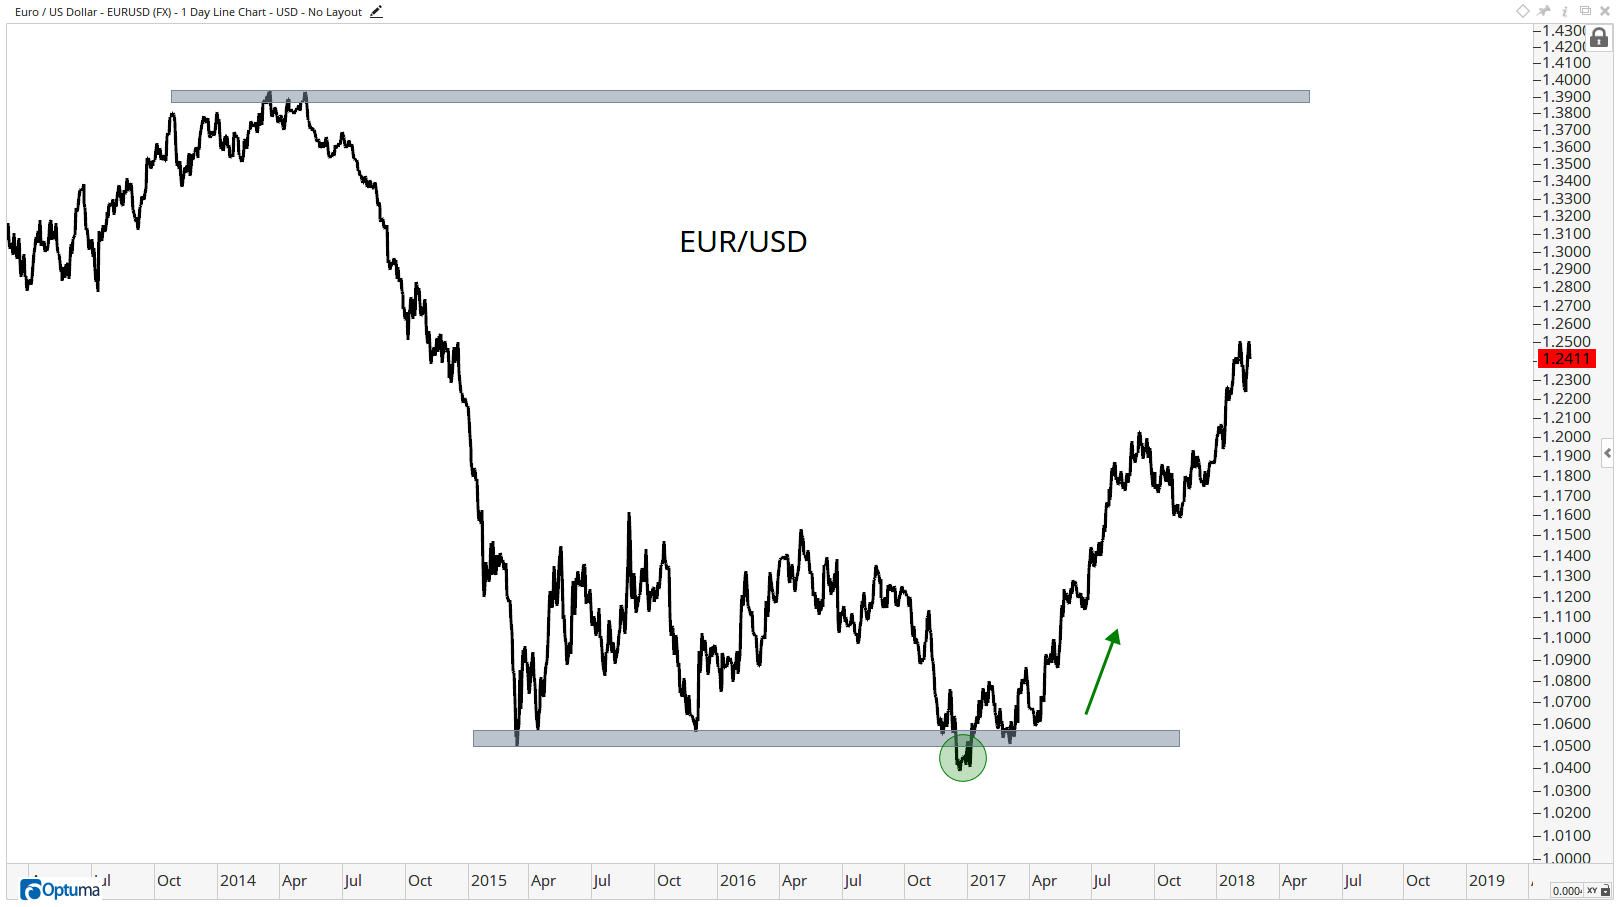 EURUSD - Euro / US Dollar3